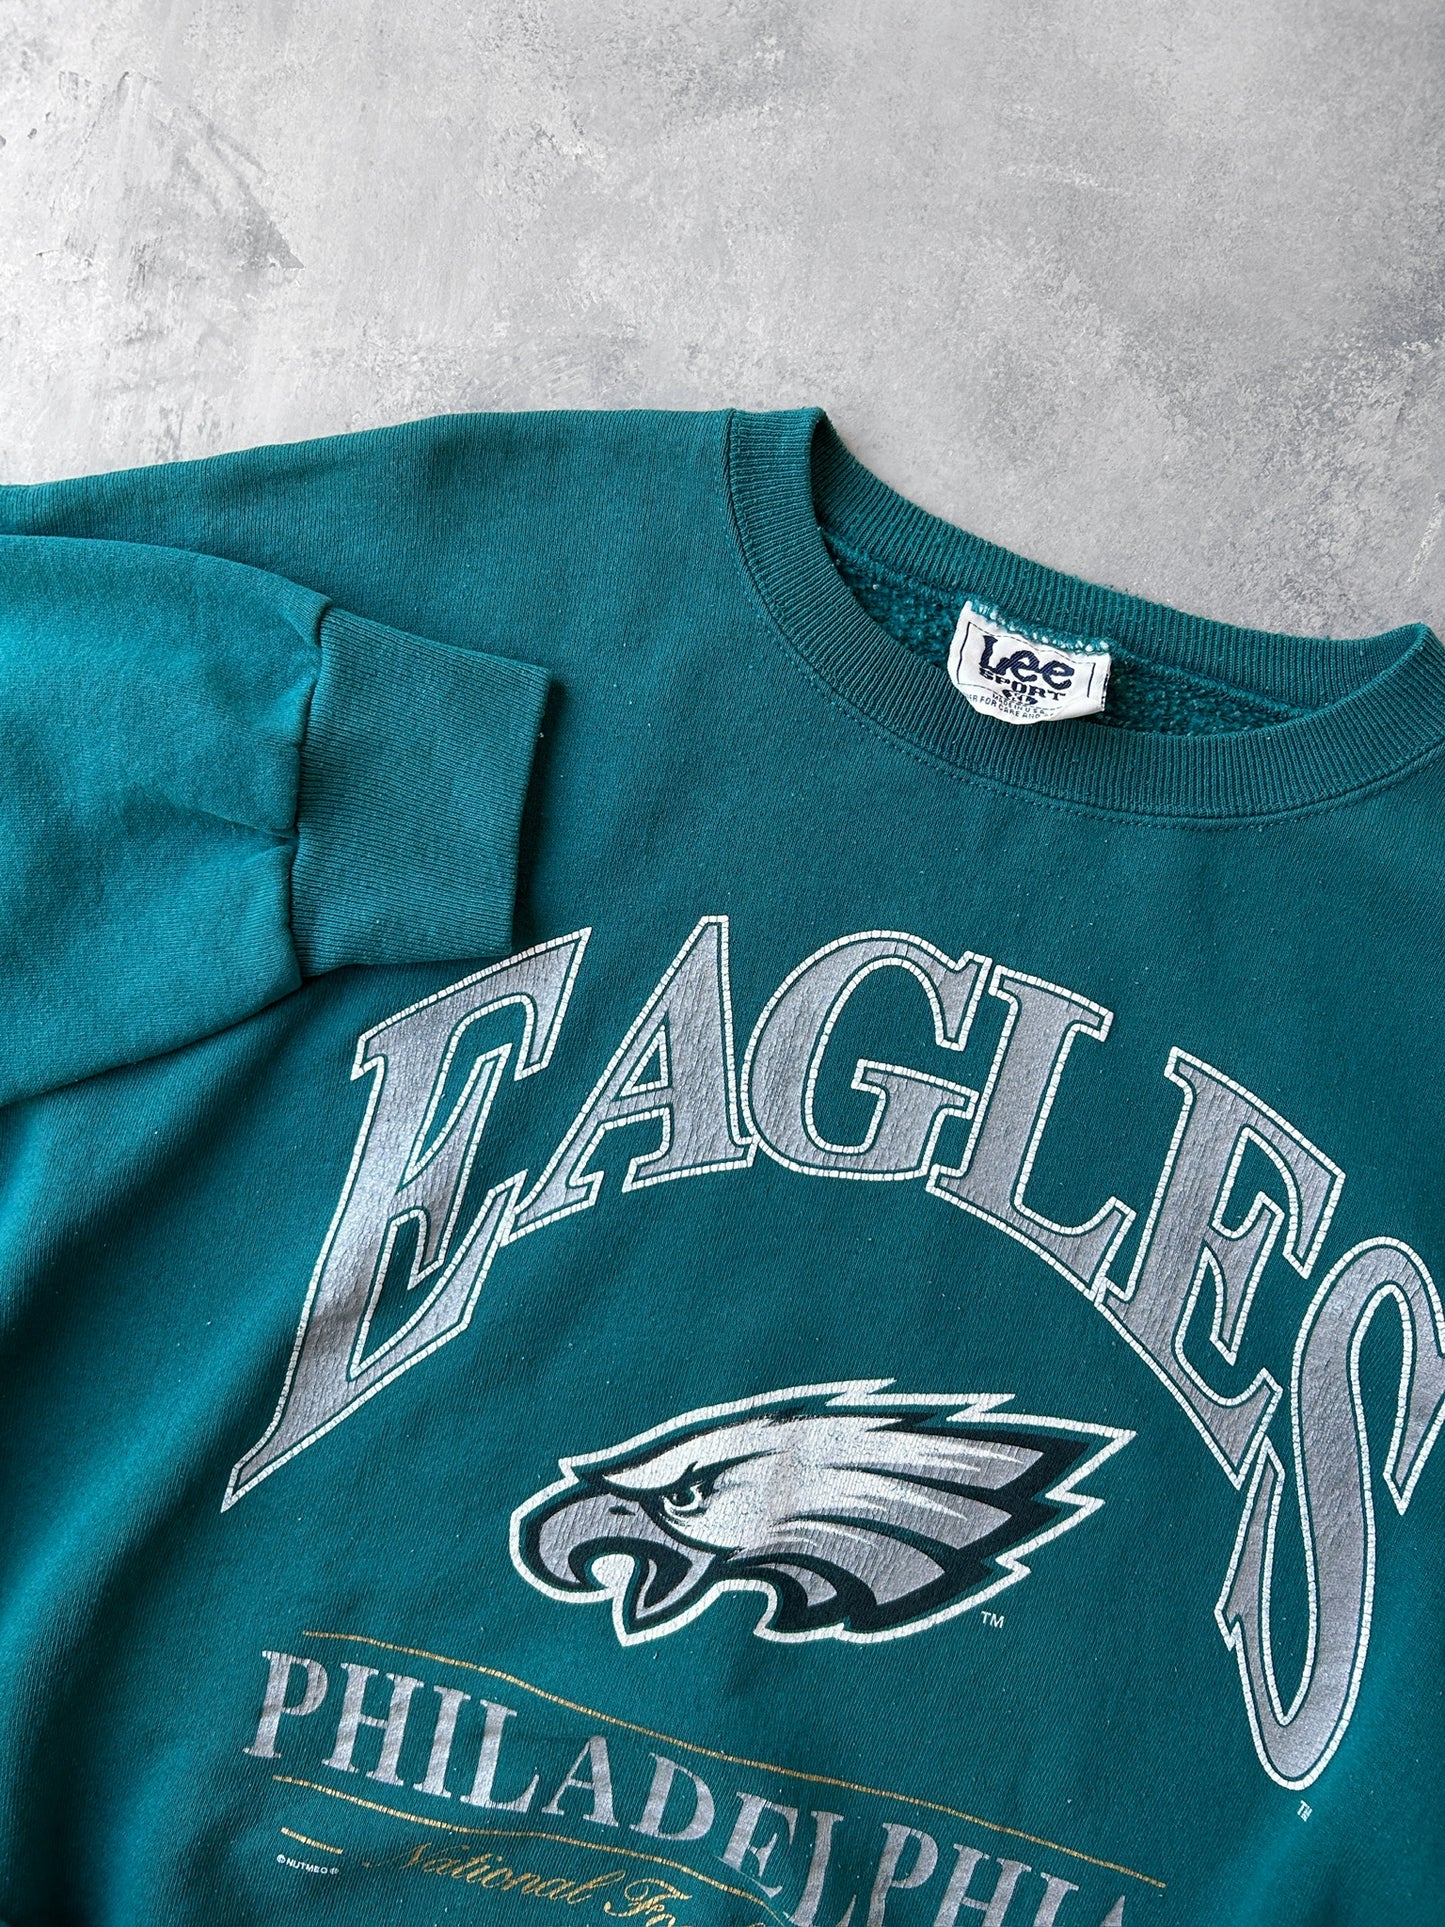 Philadelphia Eagles Sweatshirt '96 - XXL